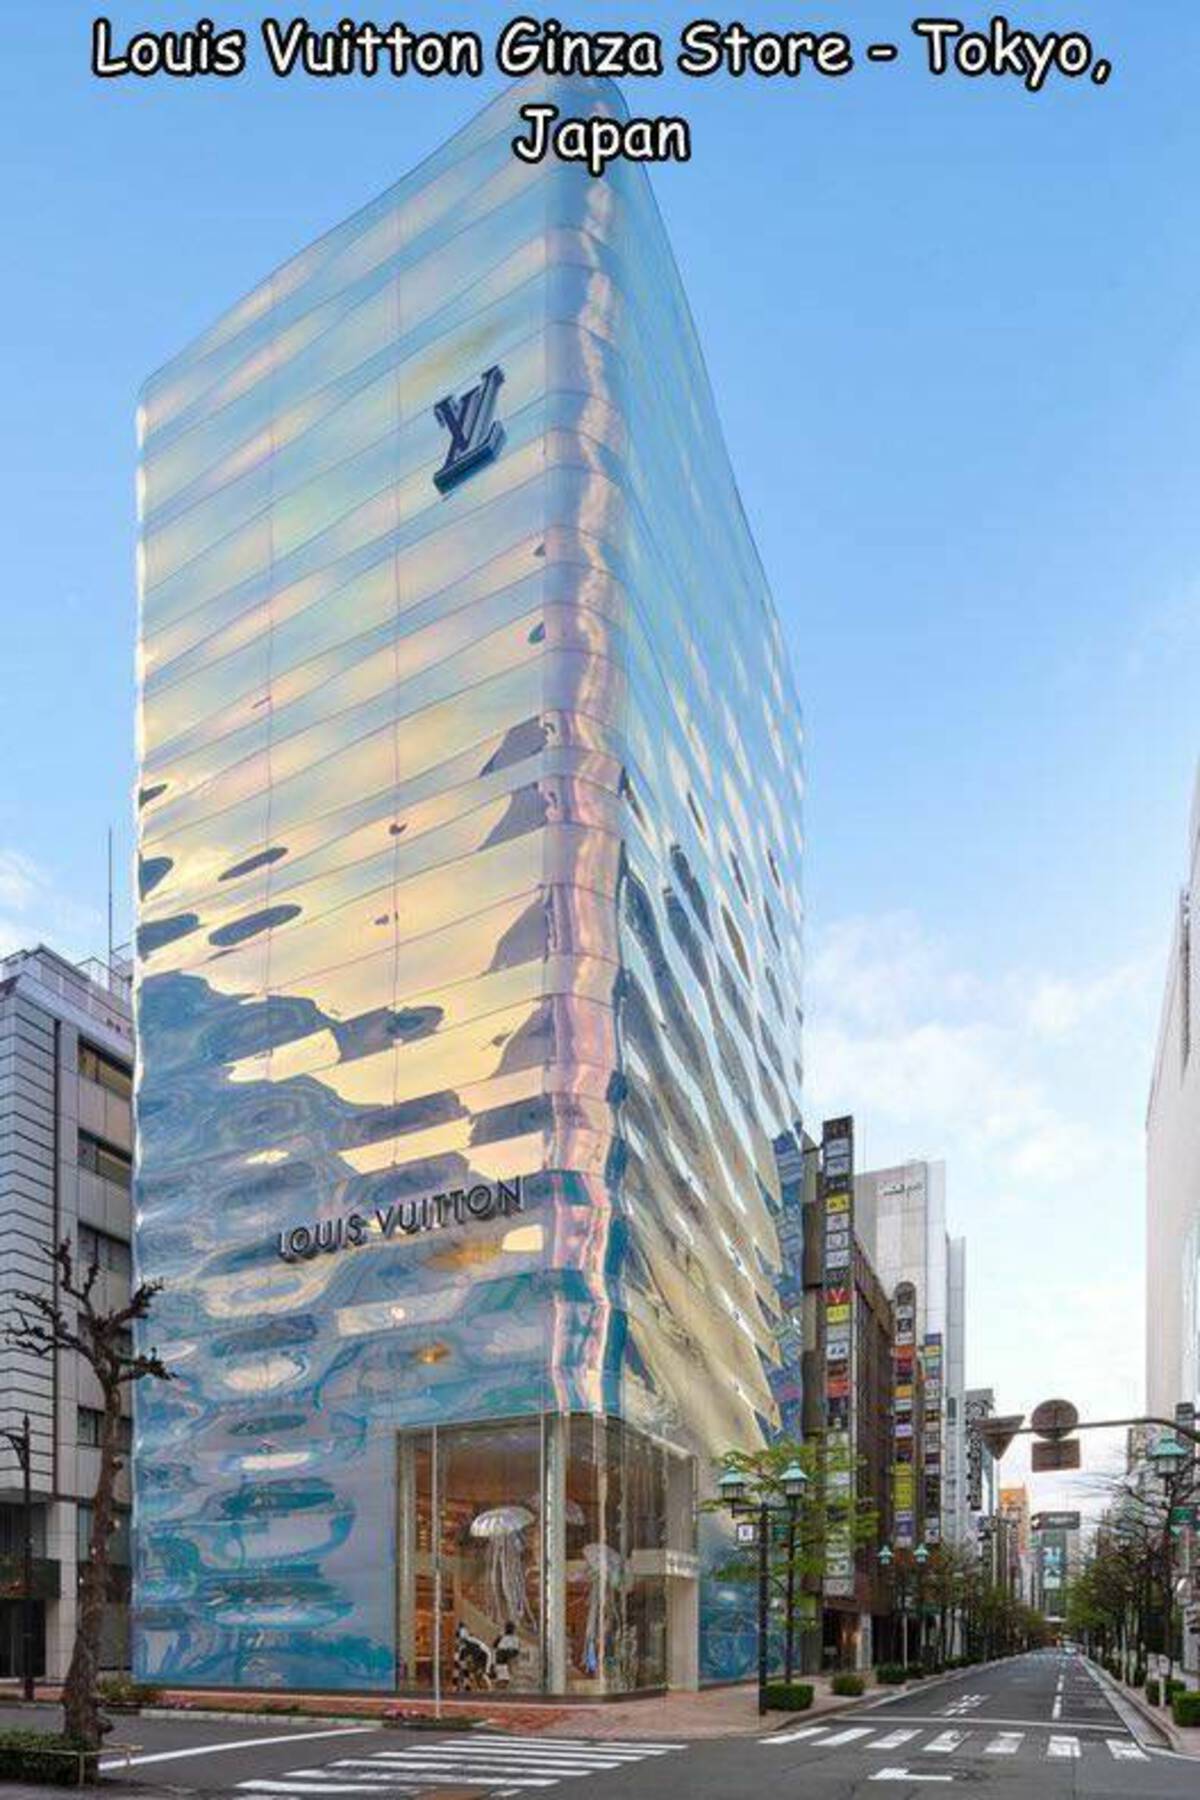 louis vuitton flagship store - Louis Vuitton Ginza Store Tokyo, Japan Louis Vuitton Y